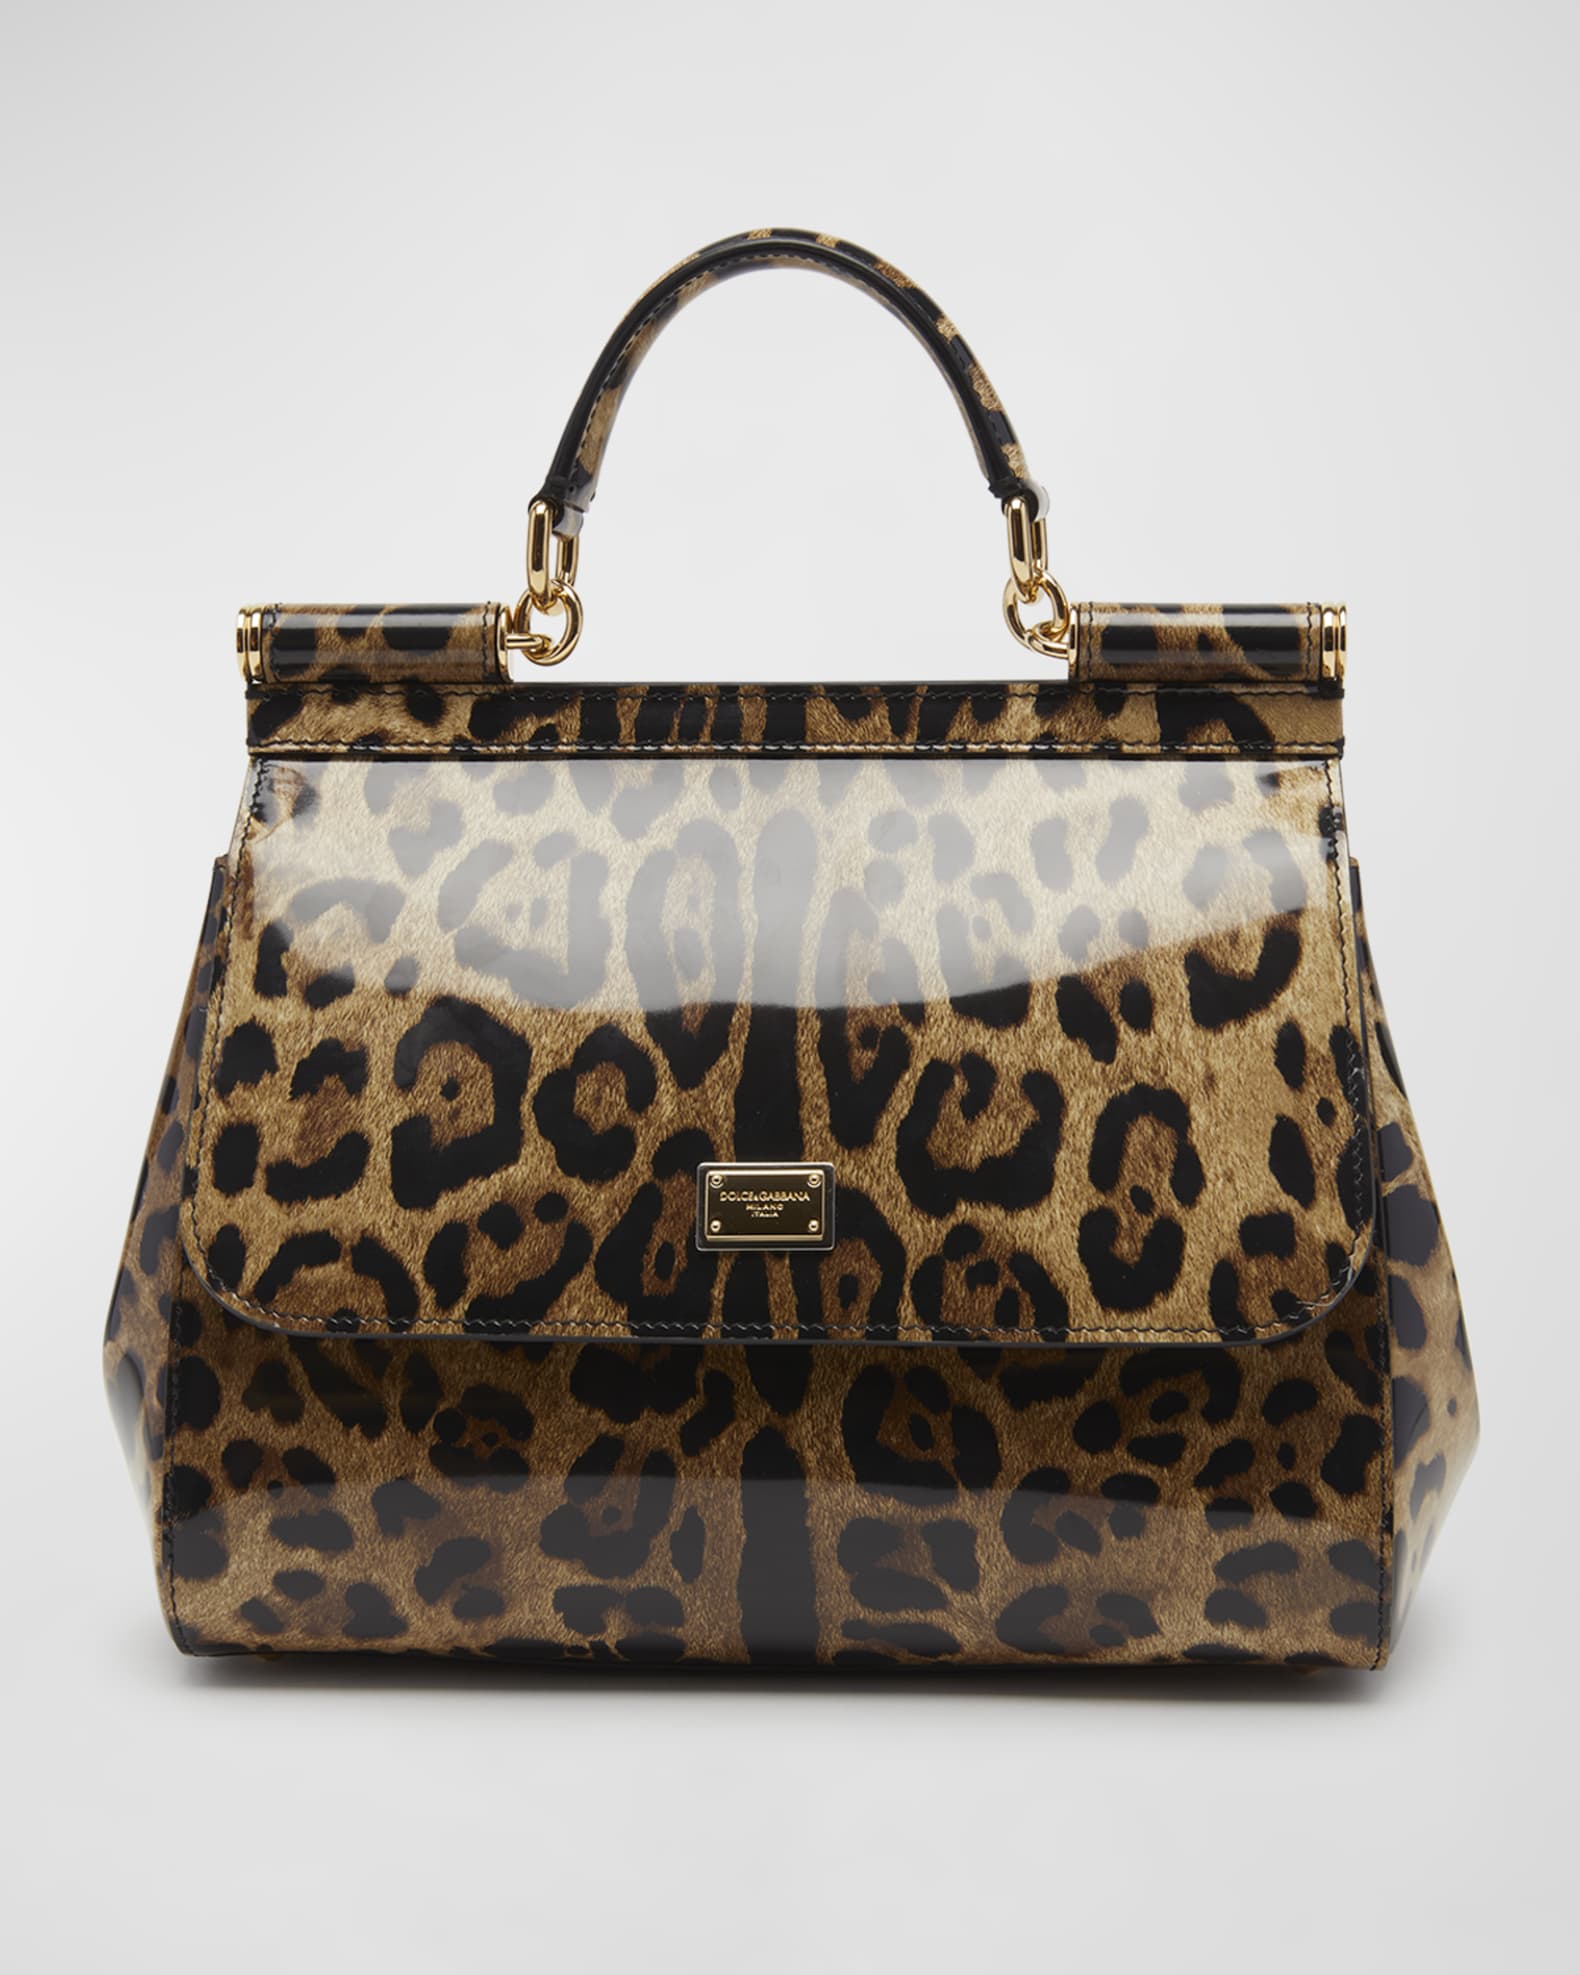 Dolce & Gabbana Kim Sicily Leopard Print Handbag